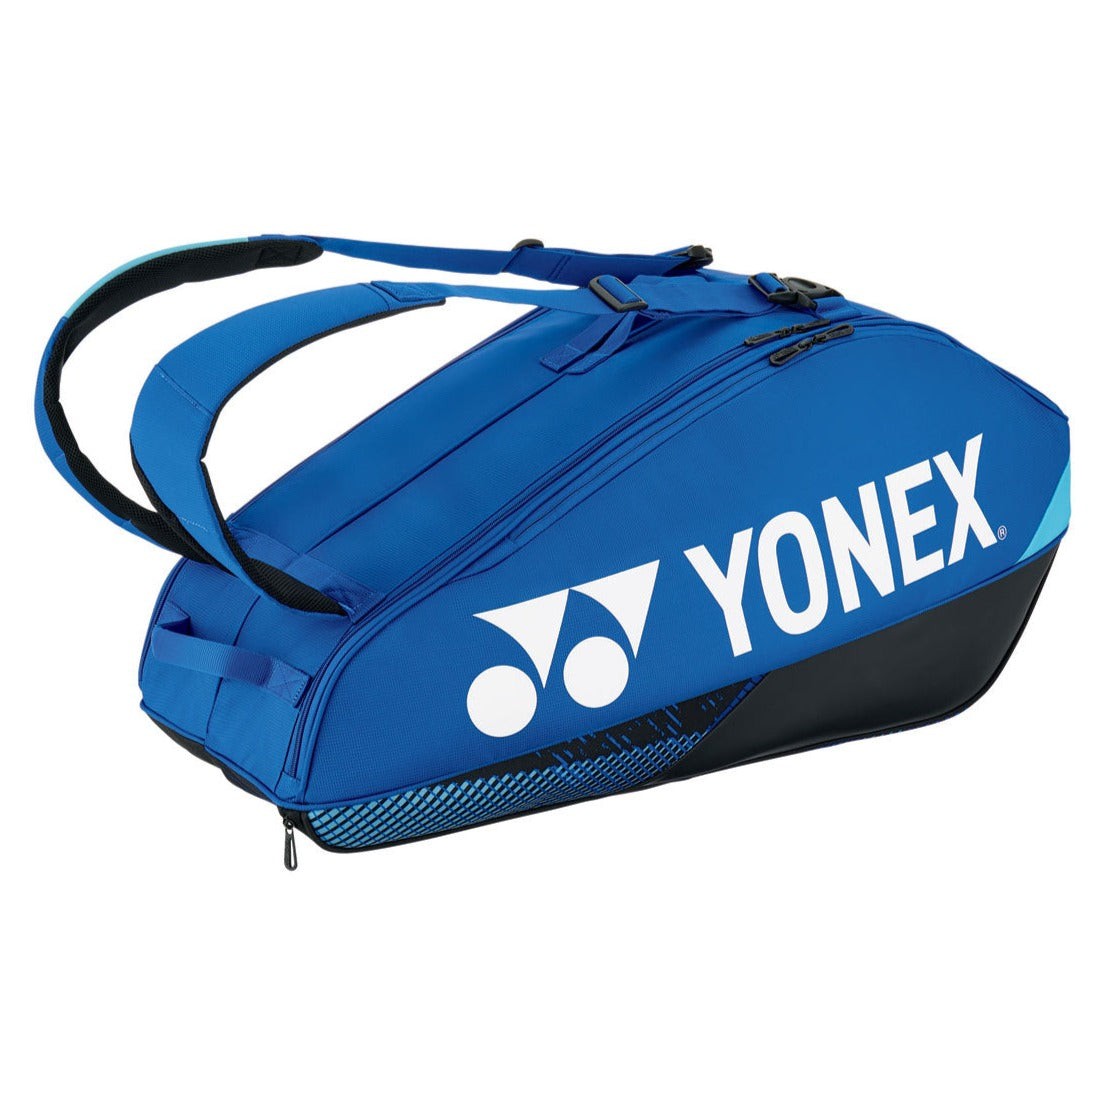 Yonex Racketbag 92429 cobalt blue